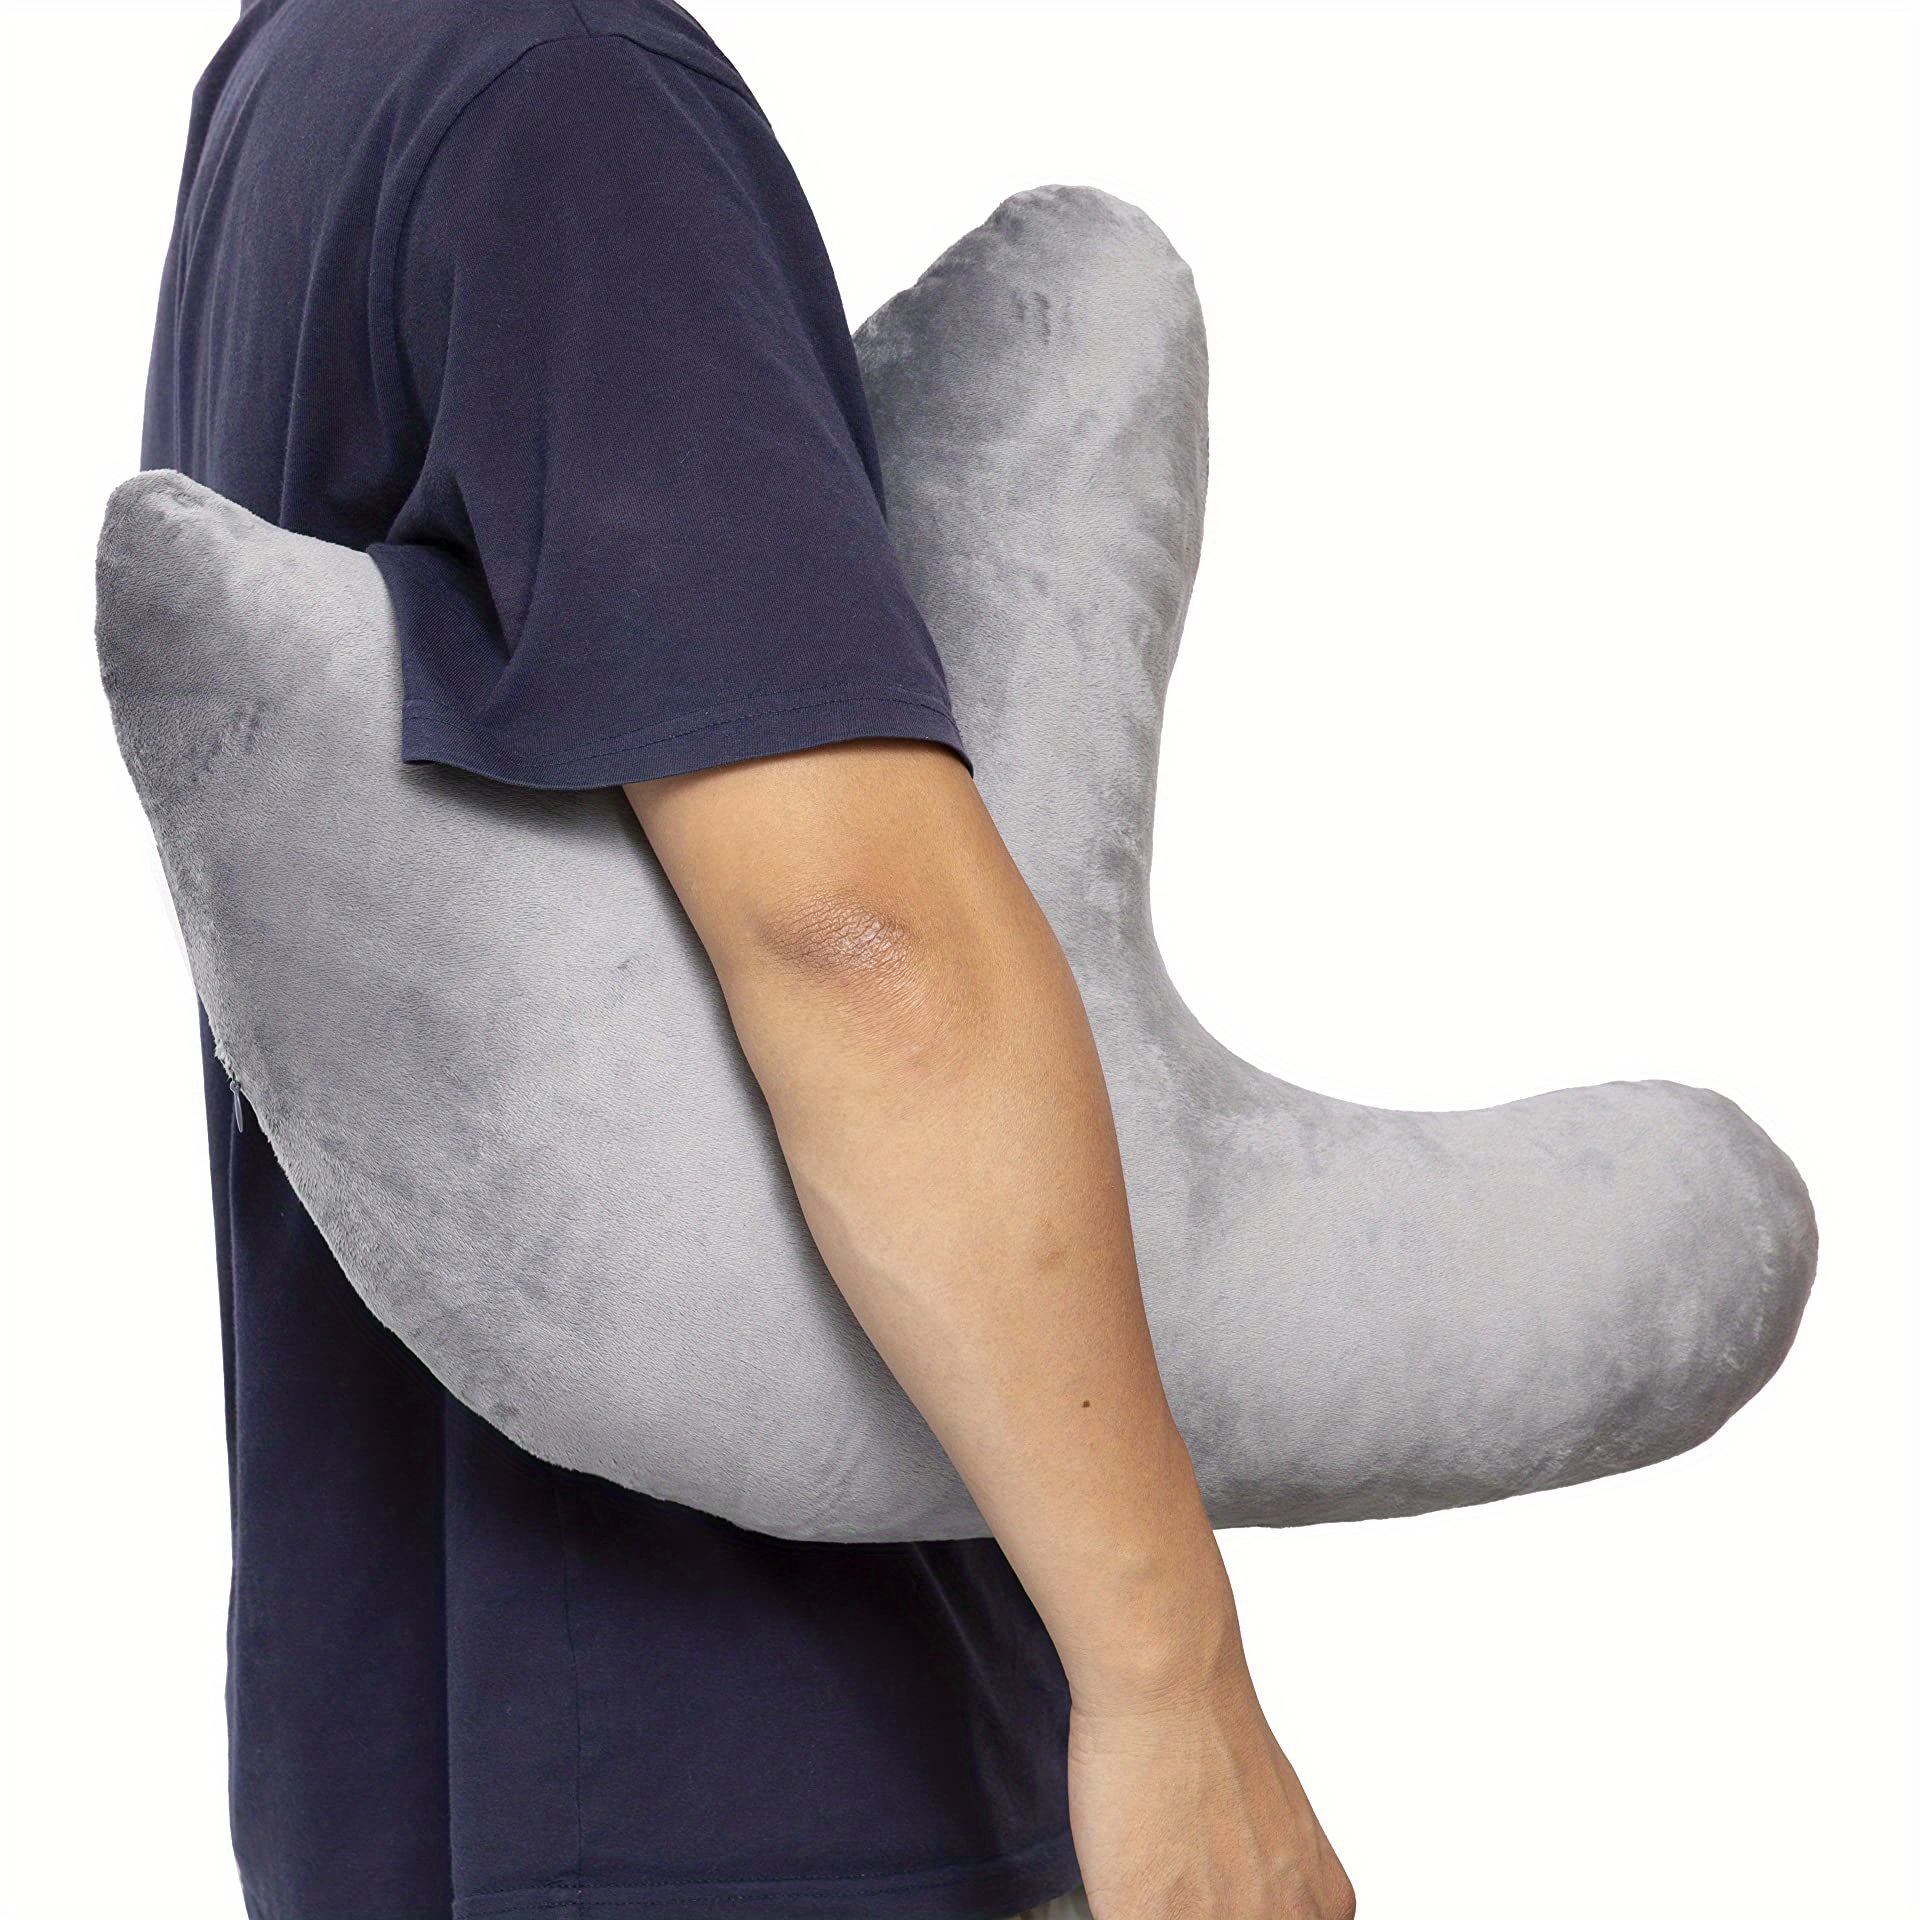 Dropship Muwago Shoulder Surgery Pillow, Rotator Cuff Pillow For